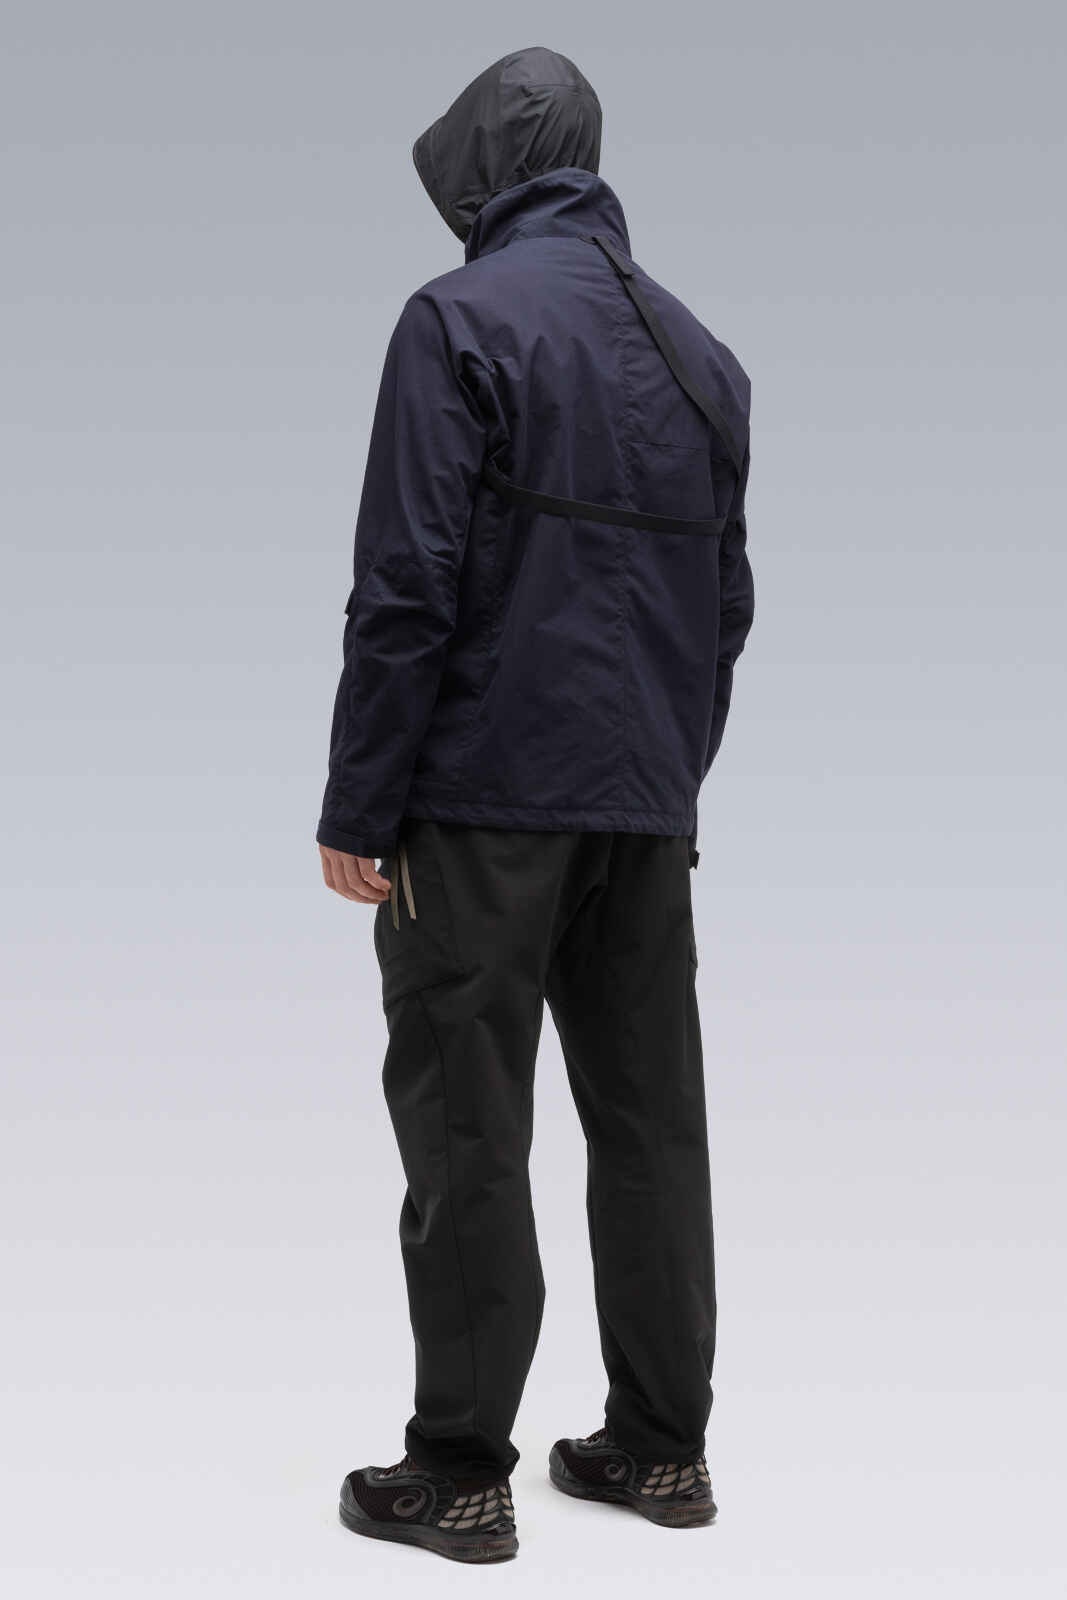 ACRONYM J36-S Stotz® EtaProof™ Interops Jacket Night | REVERSIBLE